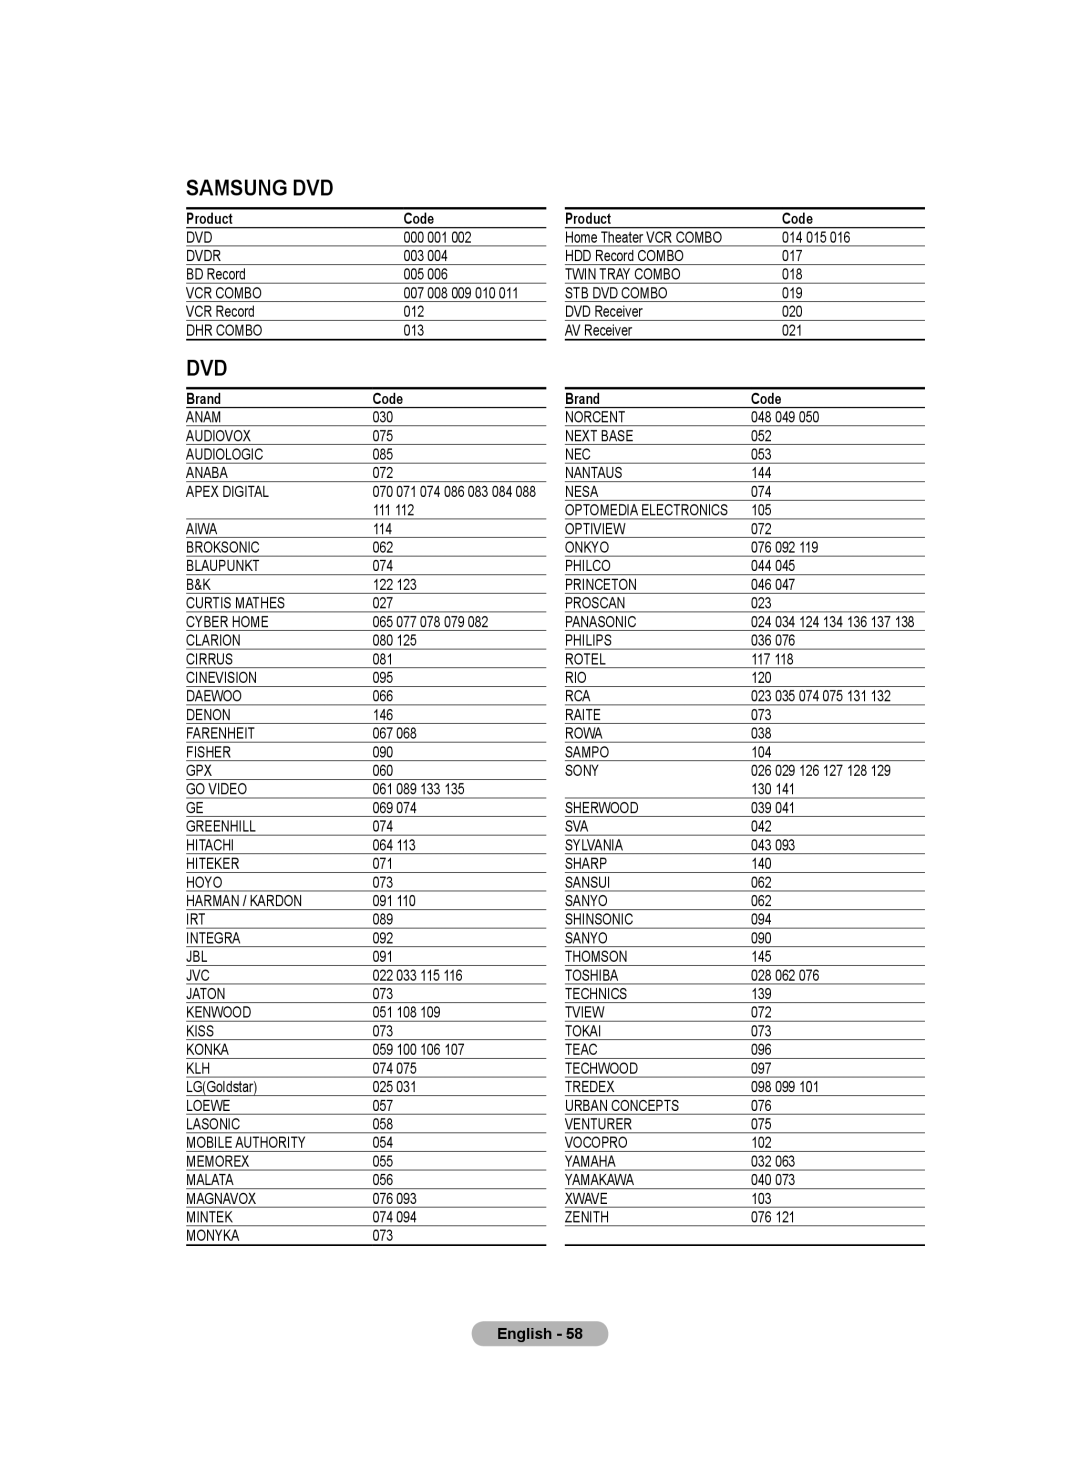 Samsung BN68-01171B-03 manual Samsung Dvd, Product, Code, Brand, English 